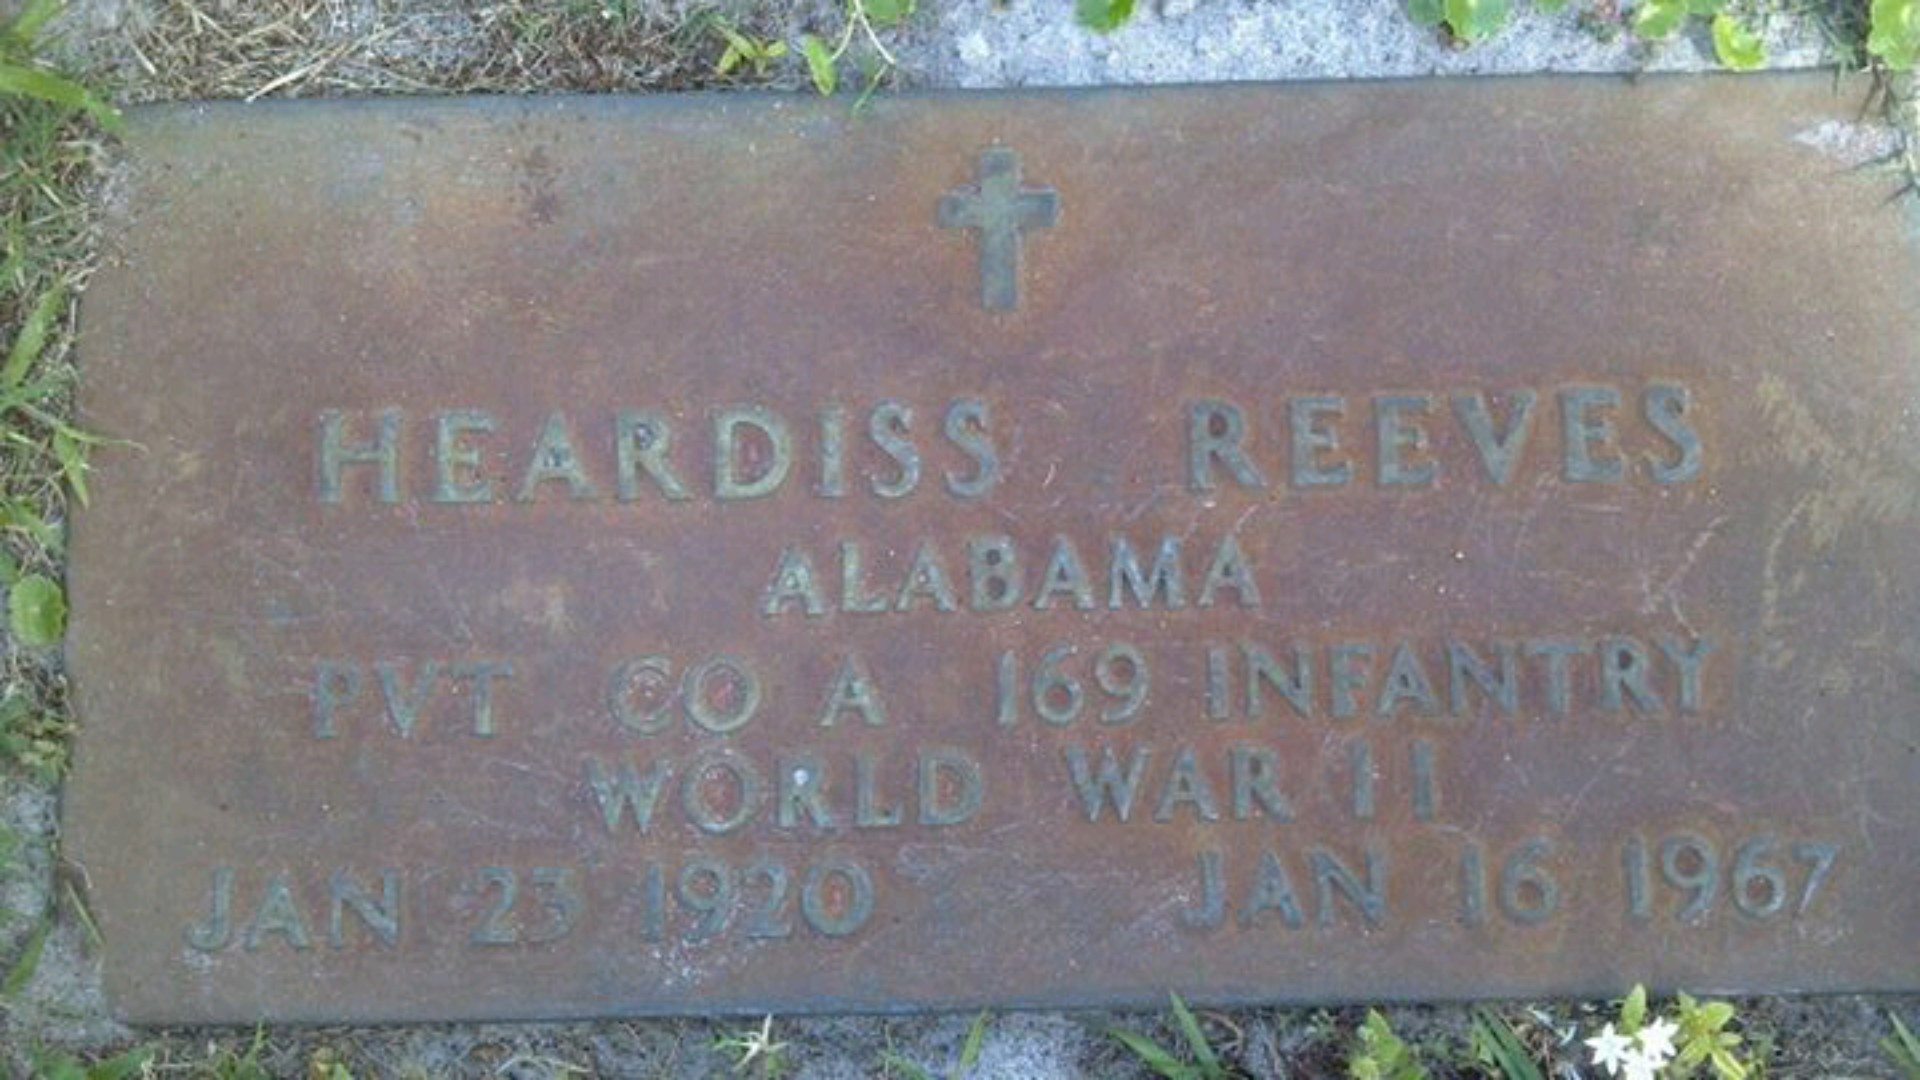 Heardiss Reeves Gravesite